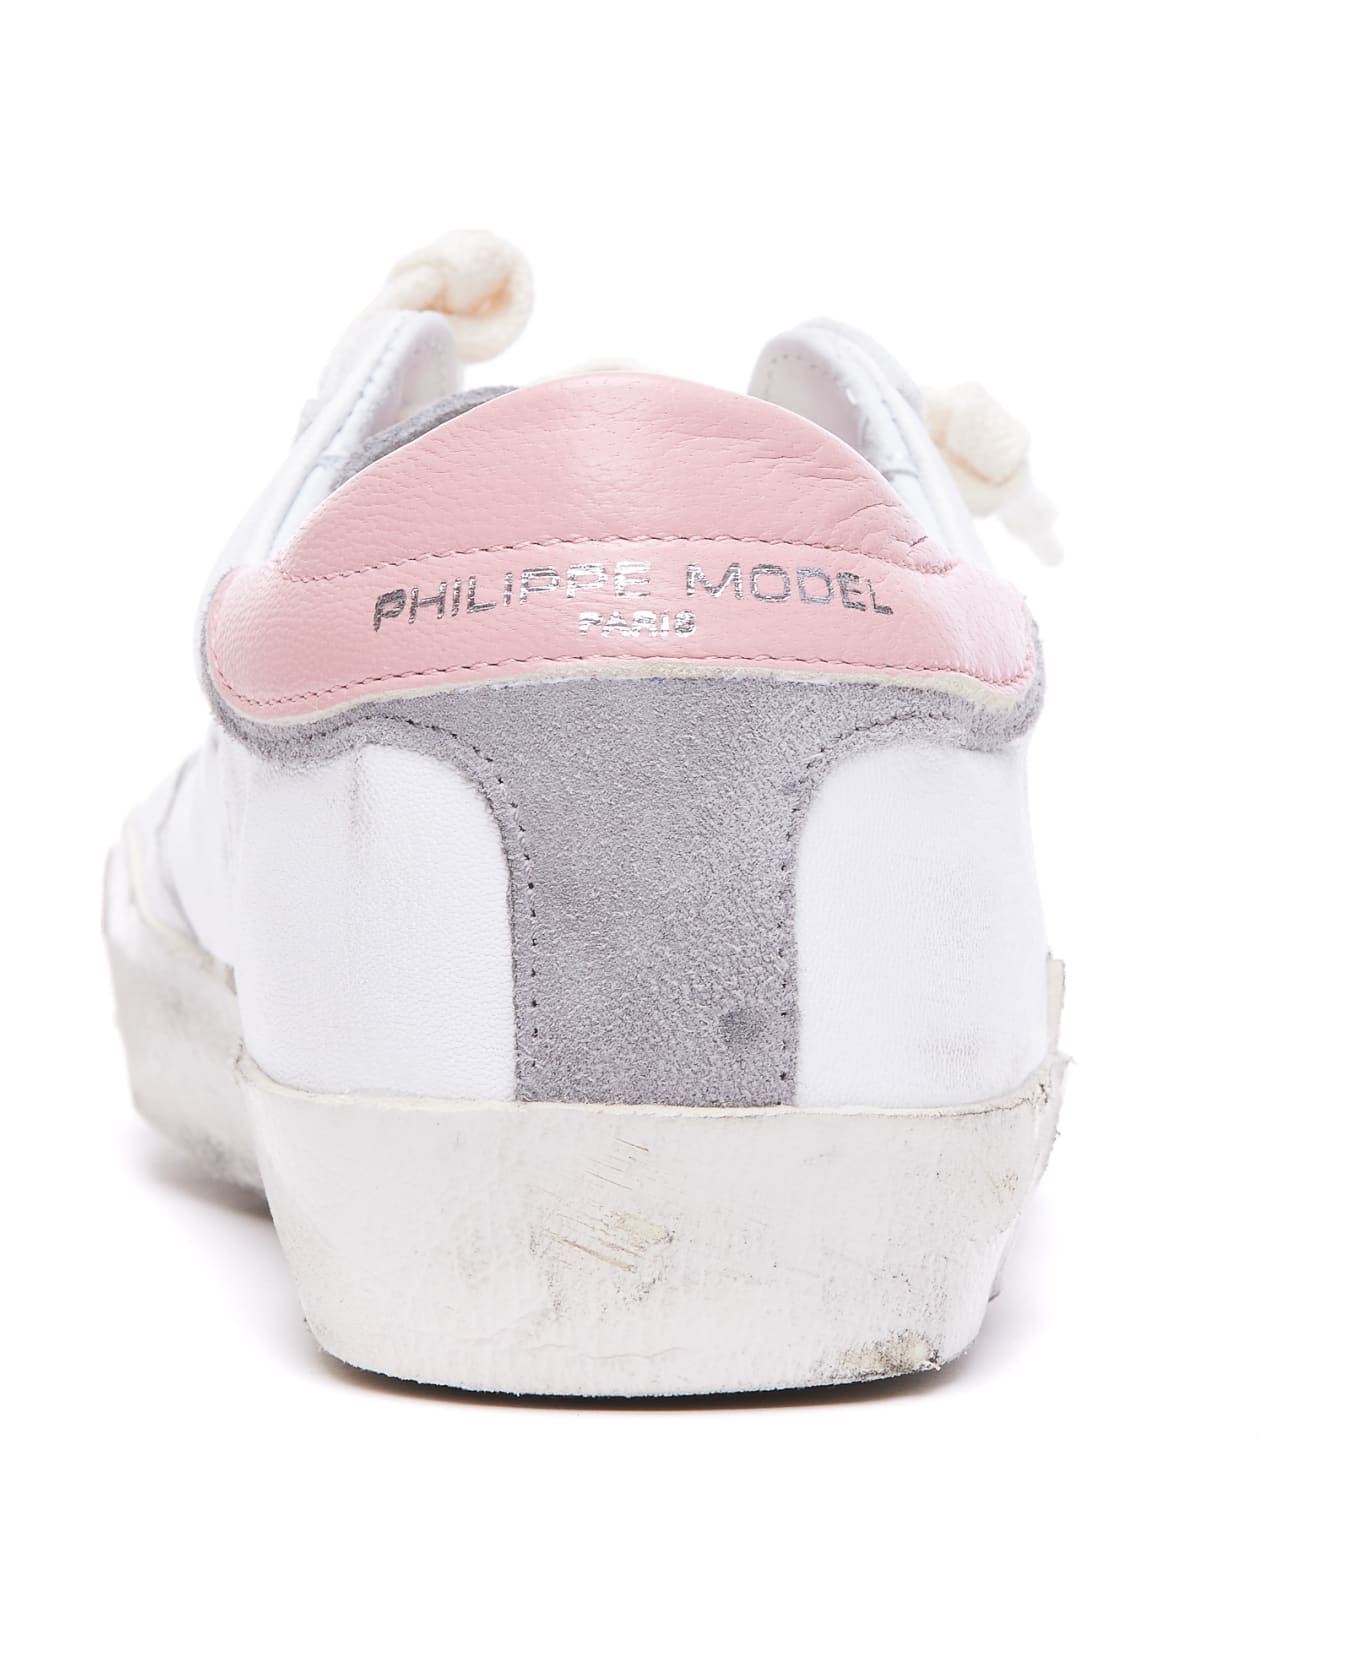 Philippe Model Prsx Low Sneakers - Vintage Mixage Blanc Anthracit